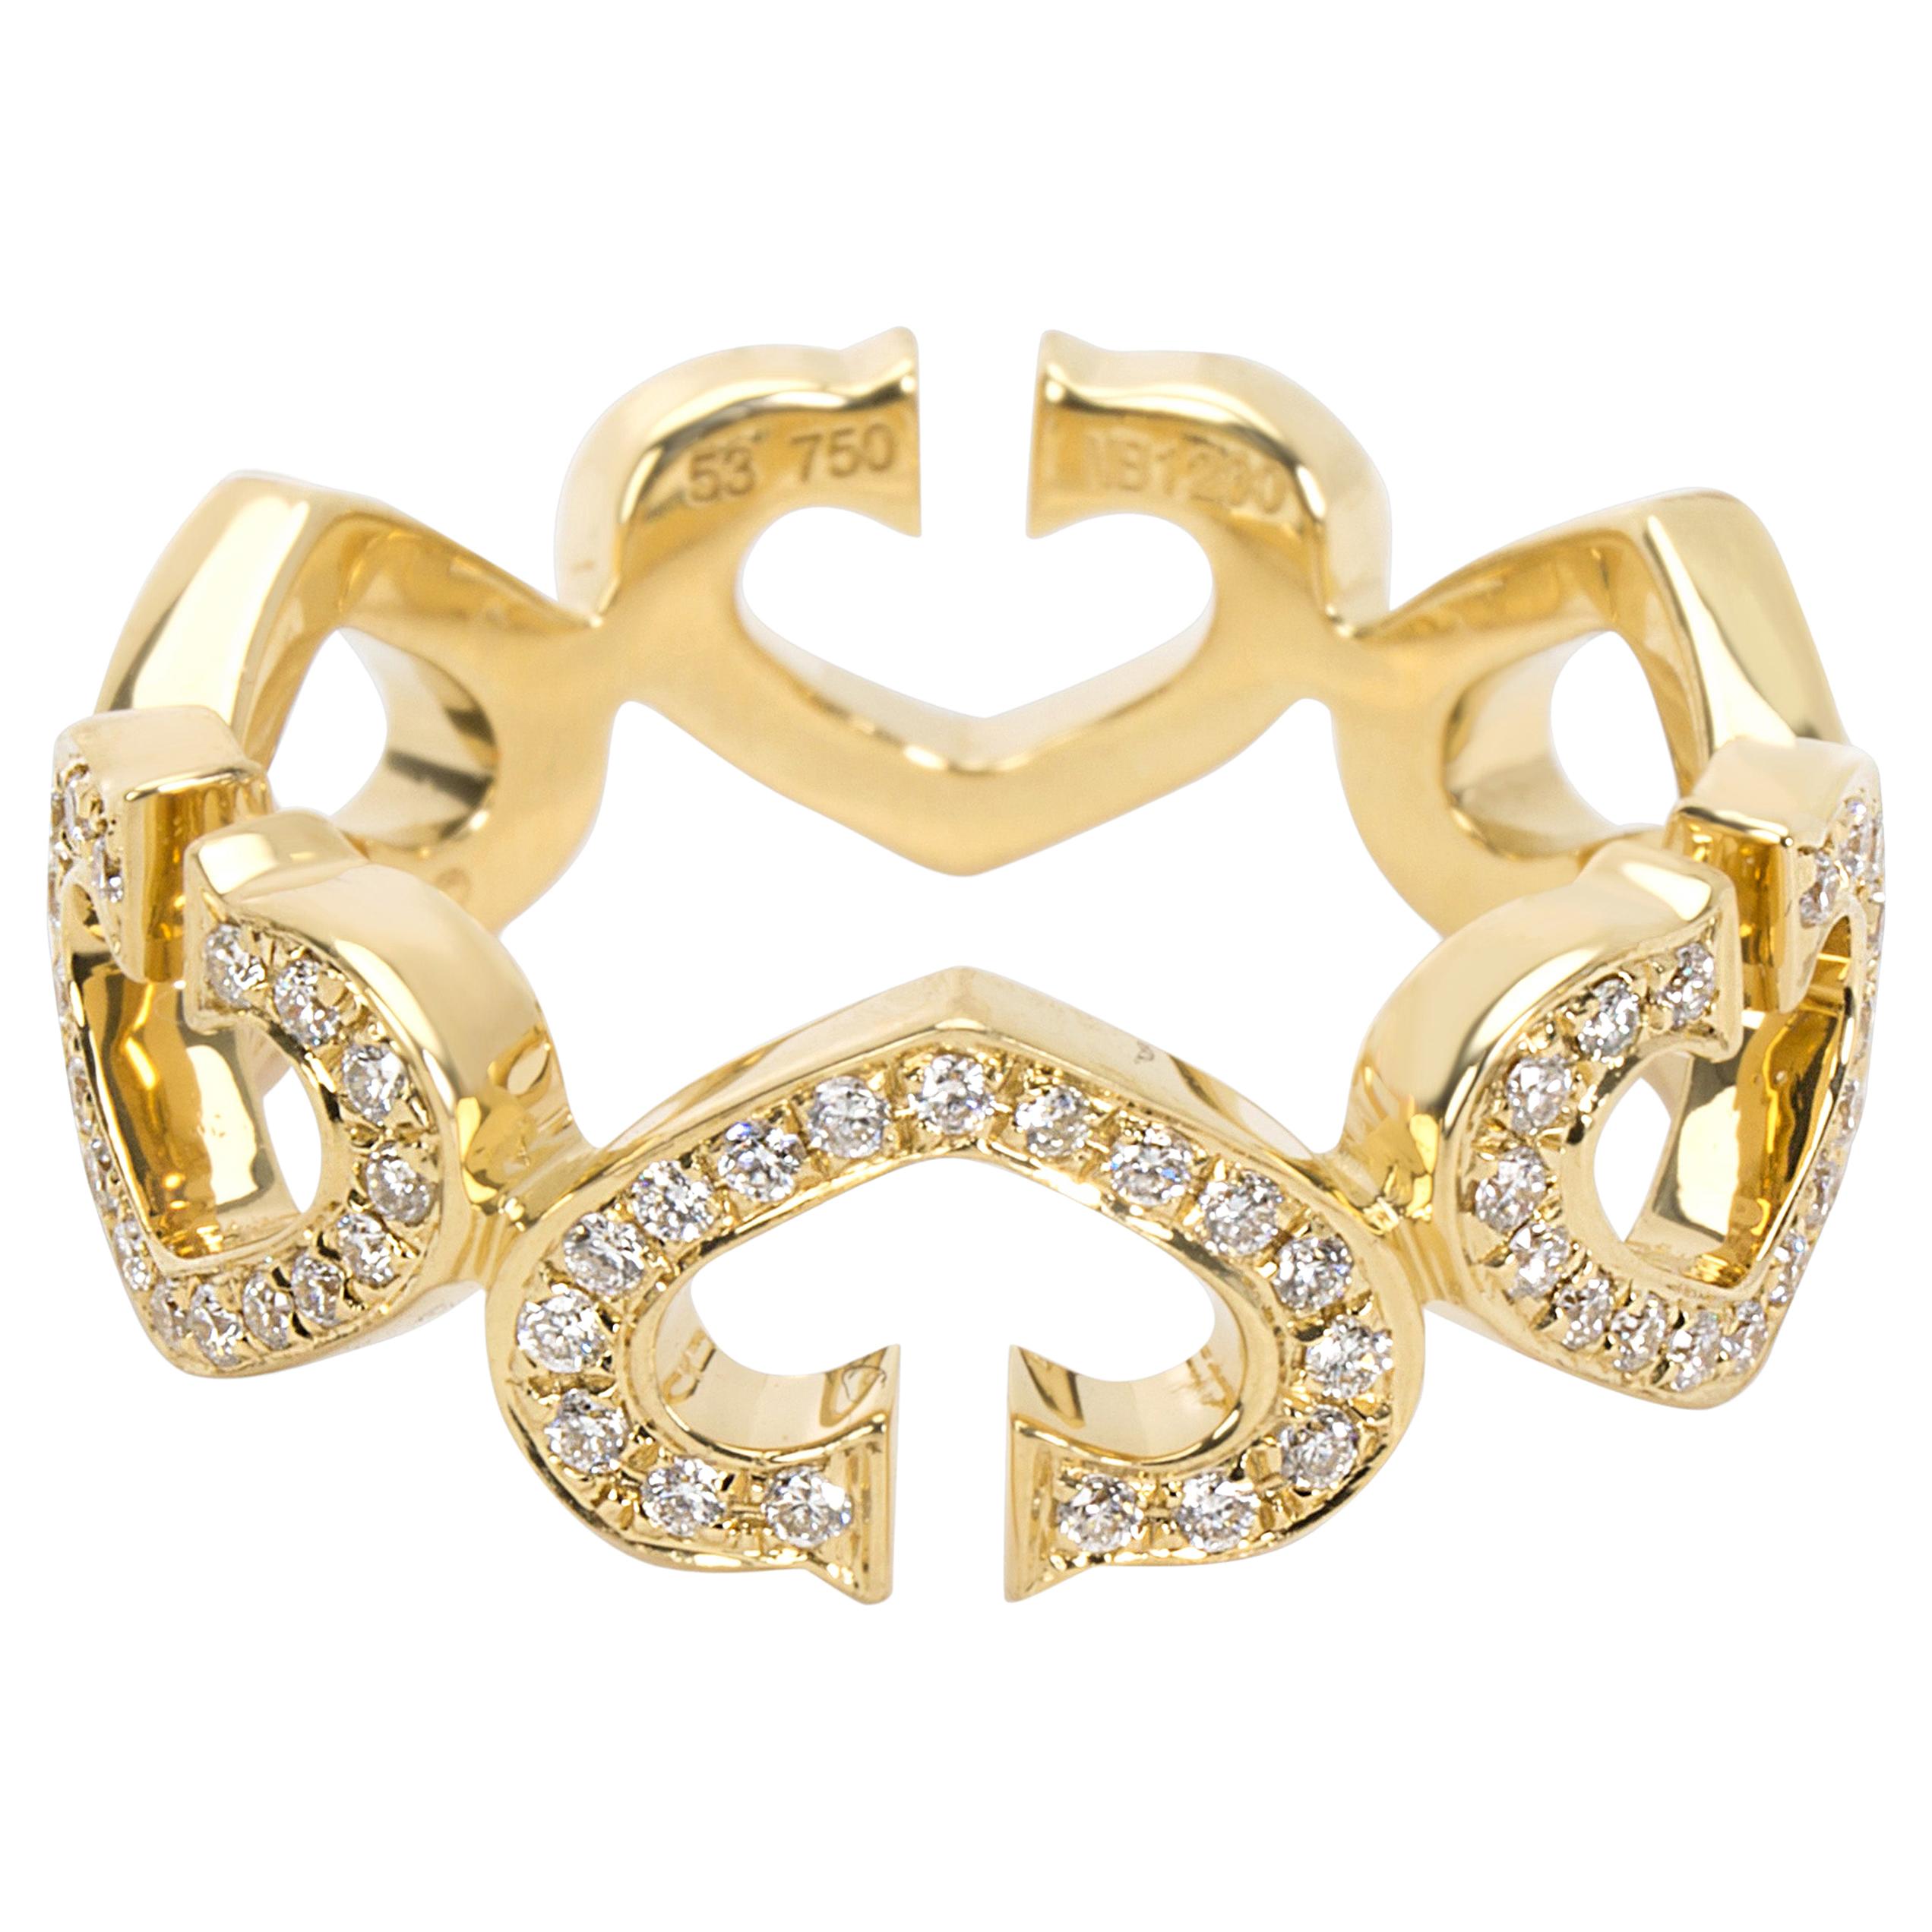 Cartier C Hearts of Cartier Diamond Ring in 18 Karat Yellow Gold 0.6 Carat